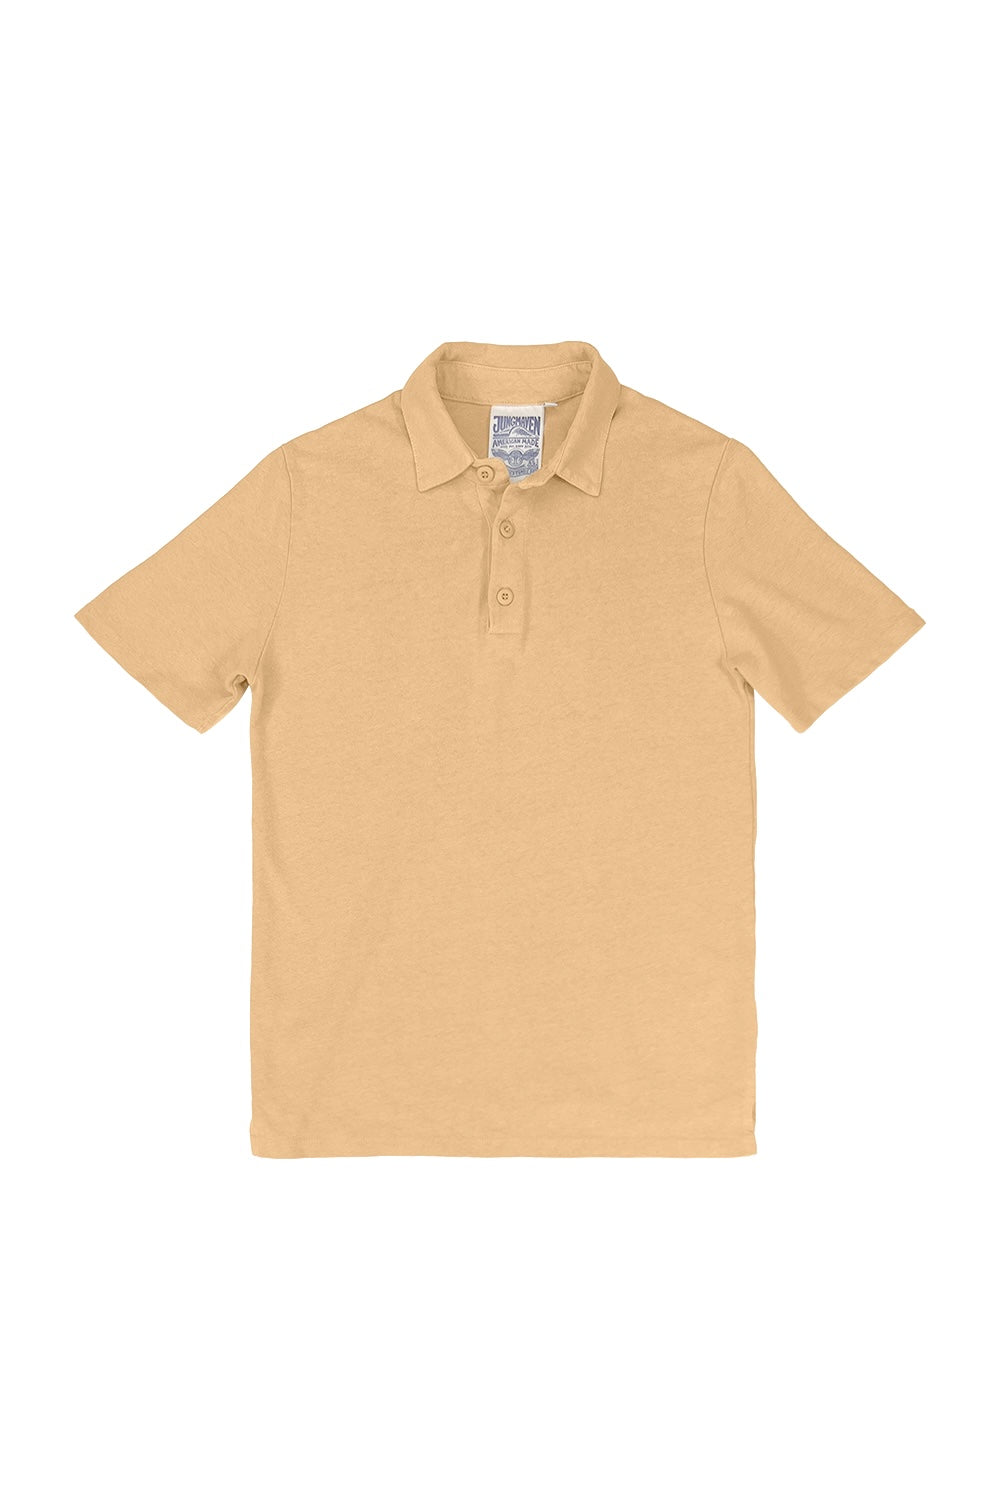 Preston Polo Shirt | Jungmaven Hemp Clothing & Accessories / Color: Oatmilk